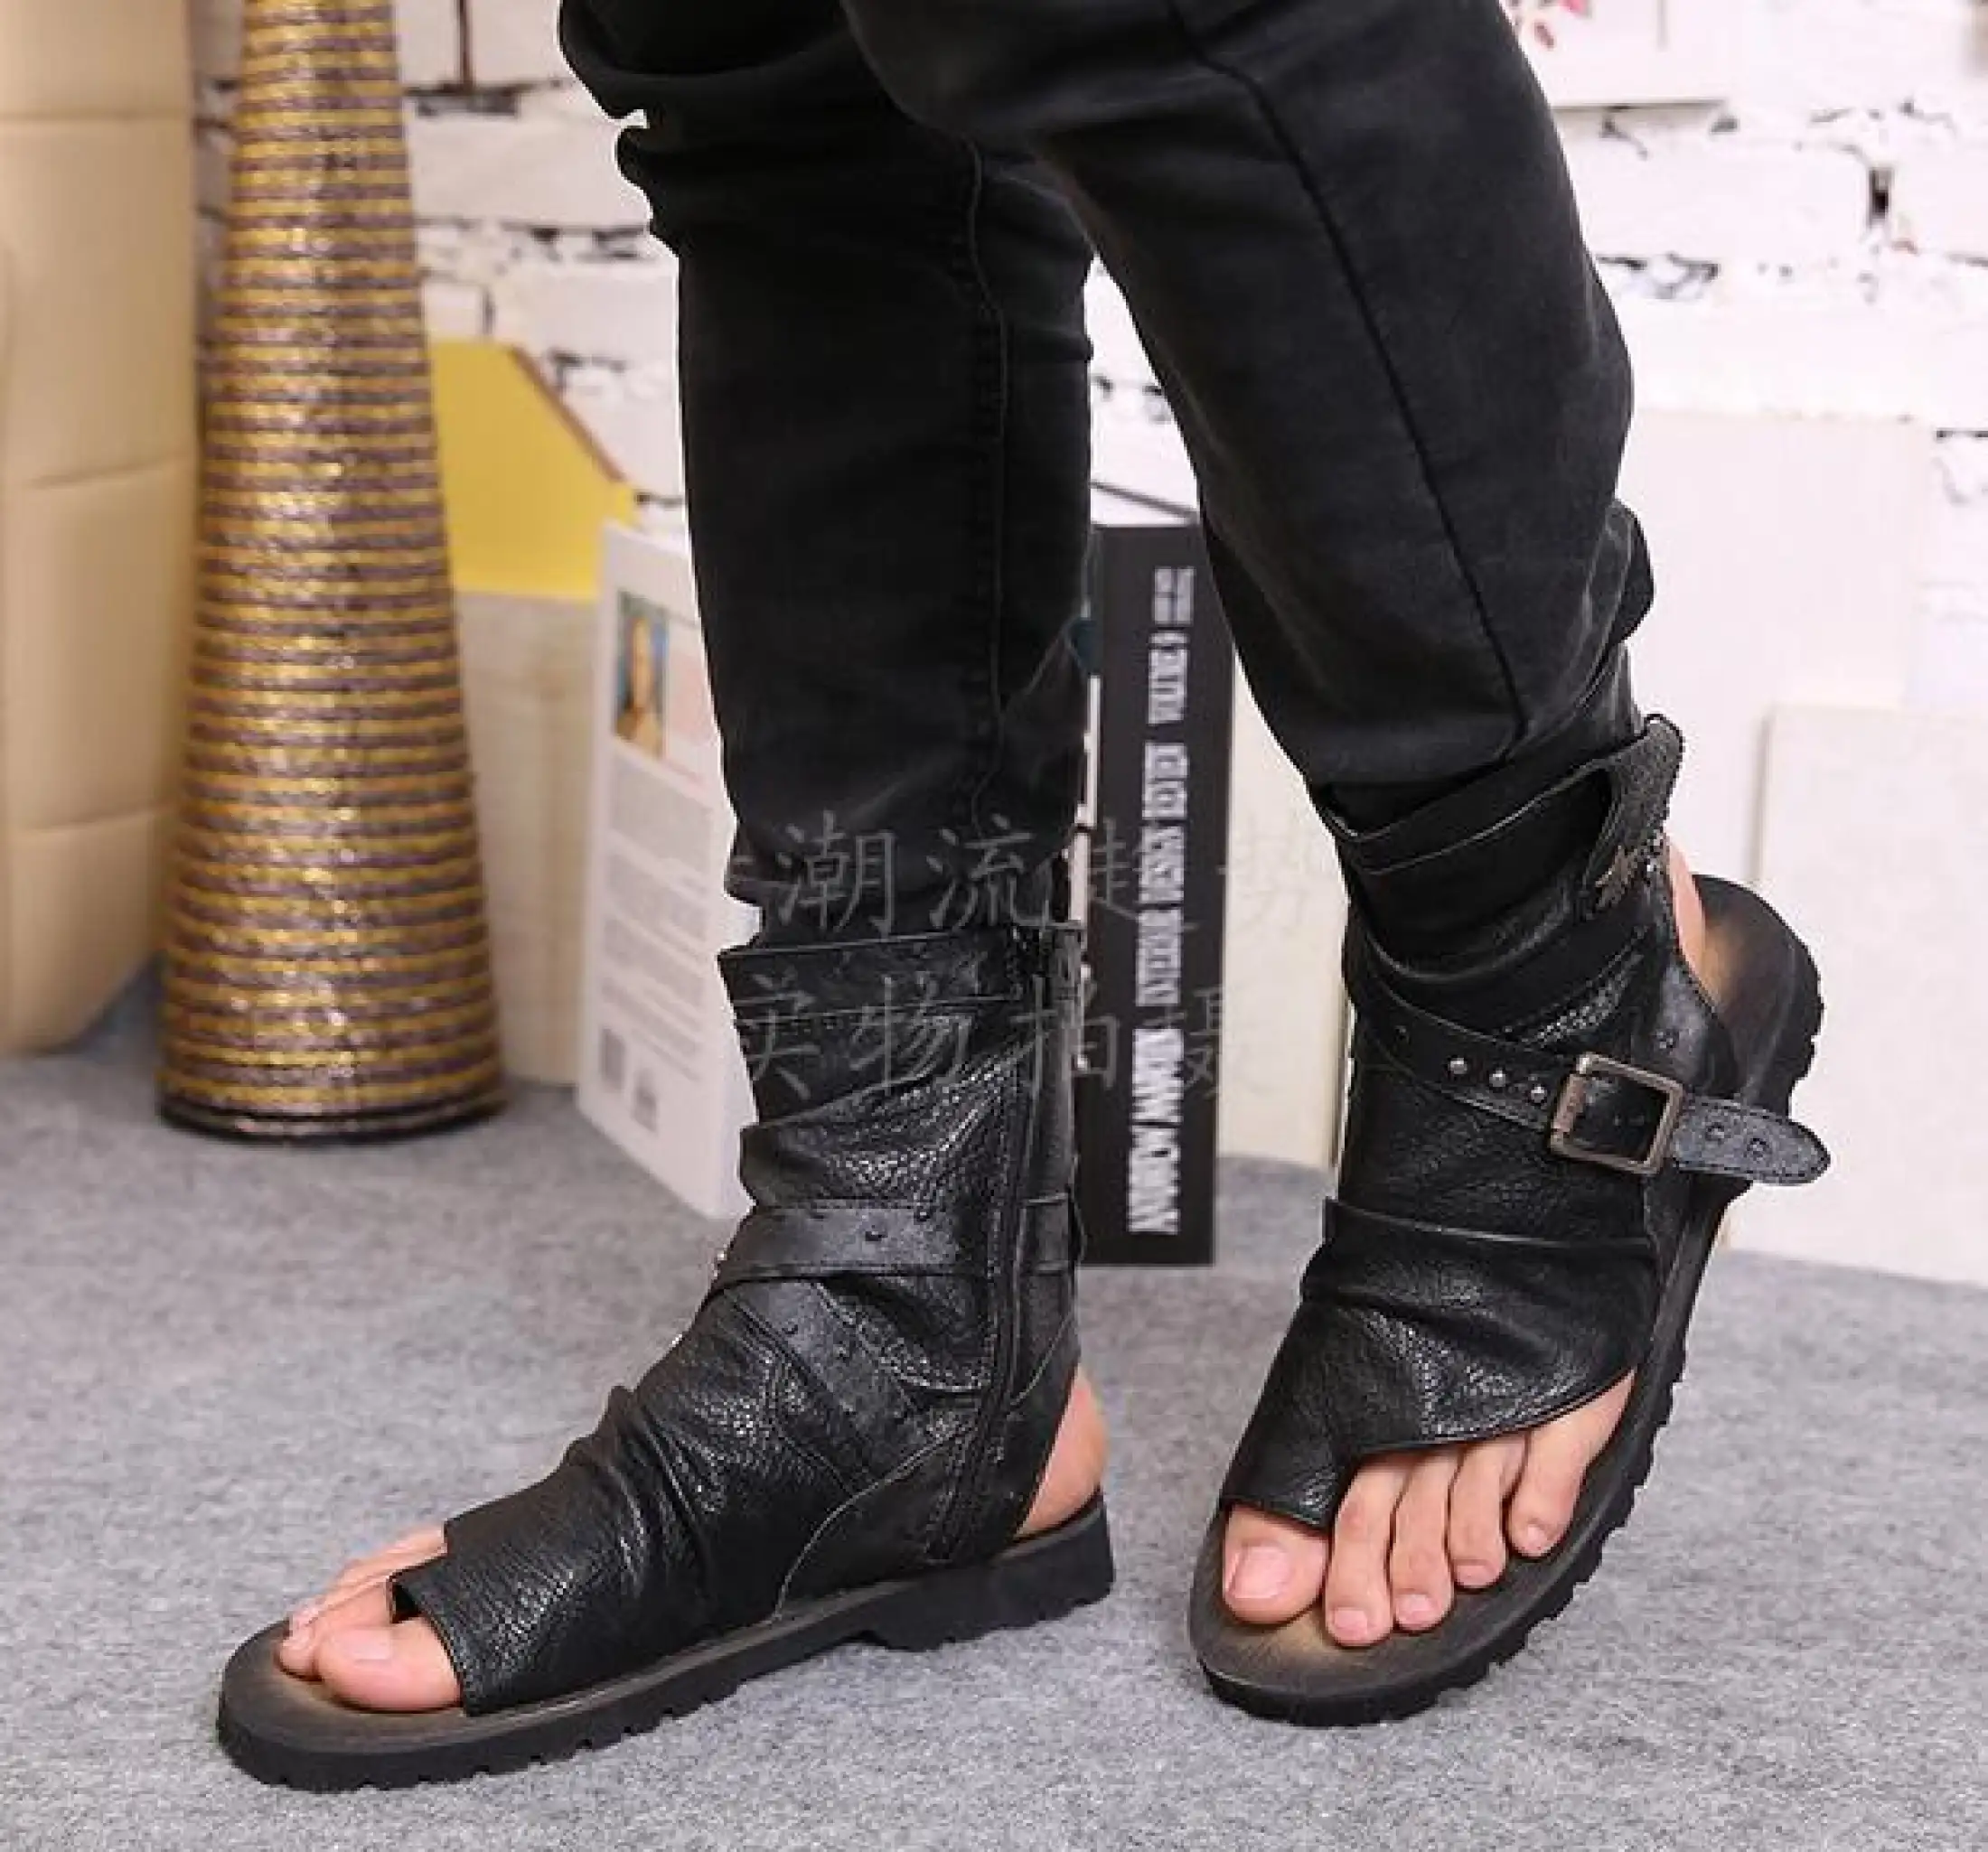 wholesale gladiator sandals